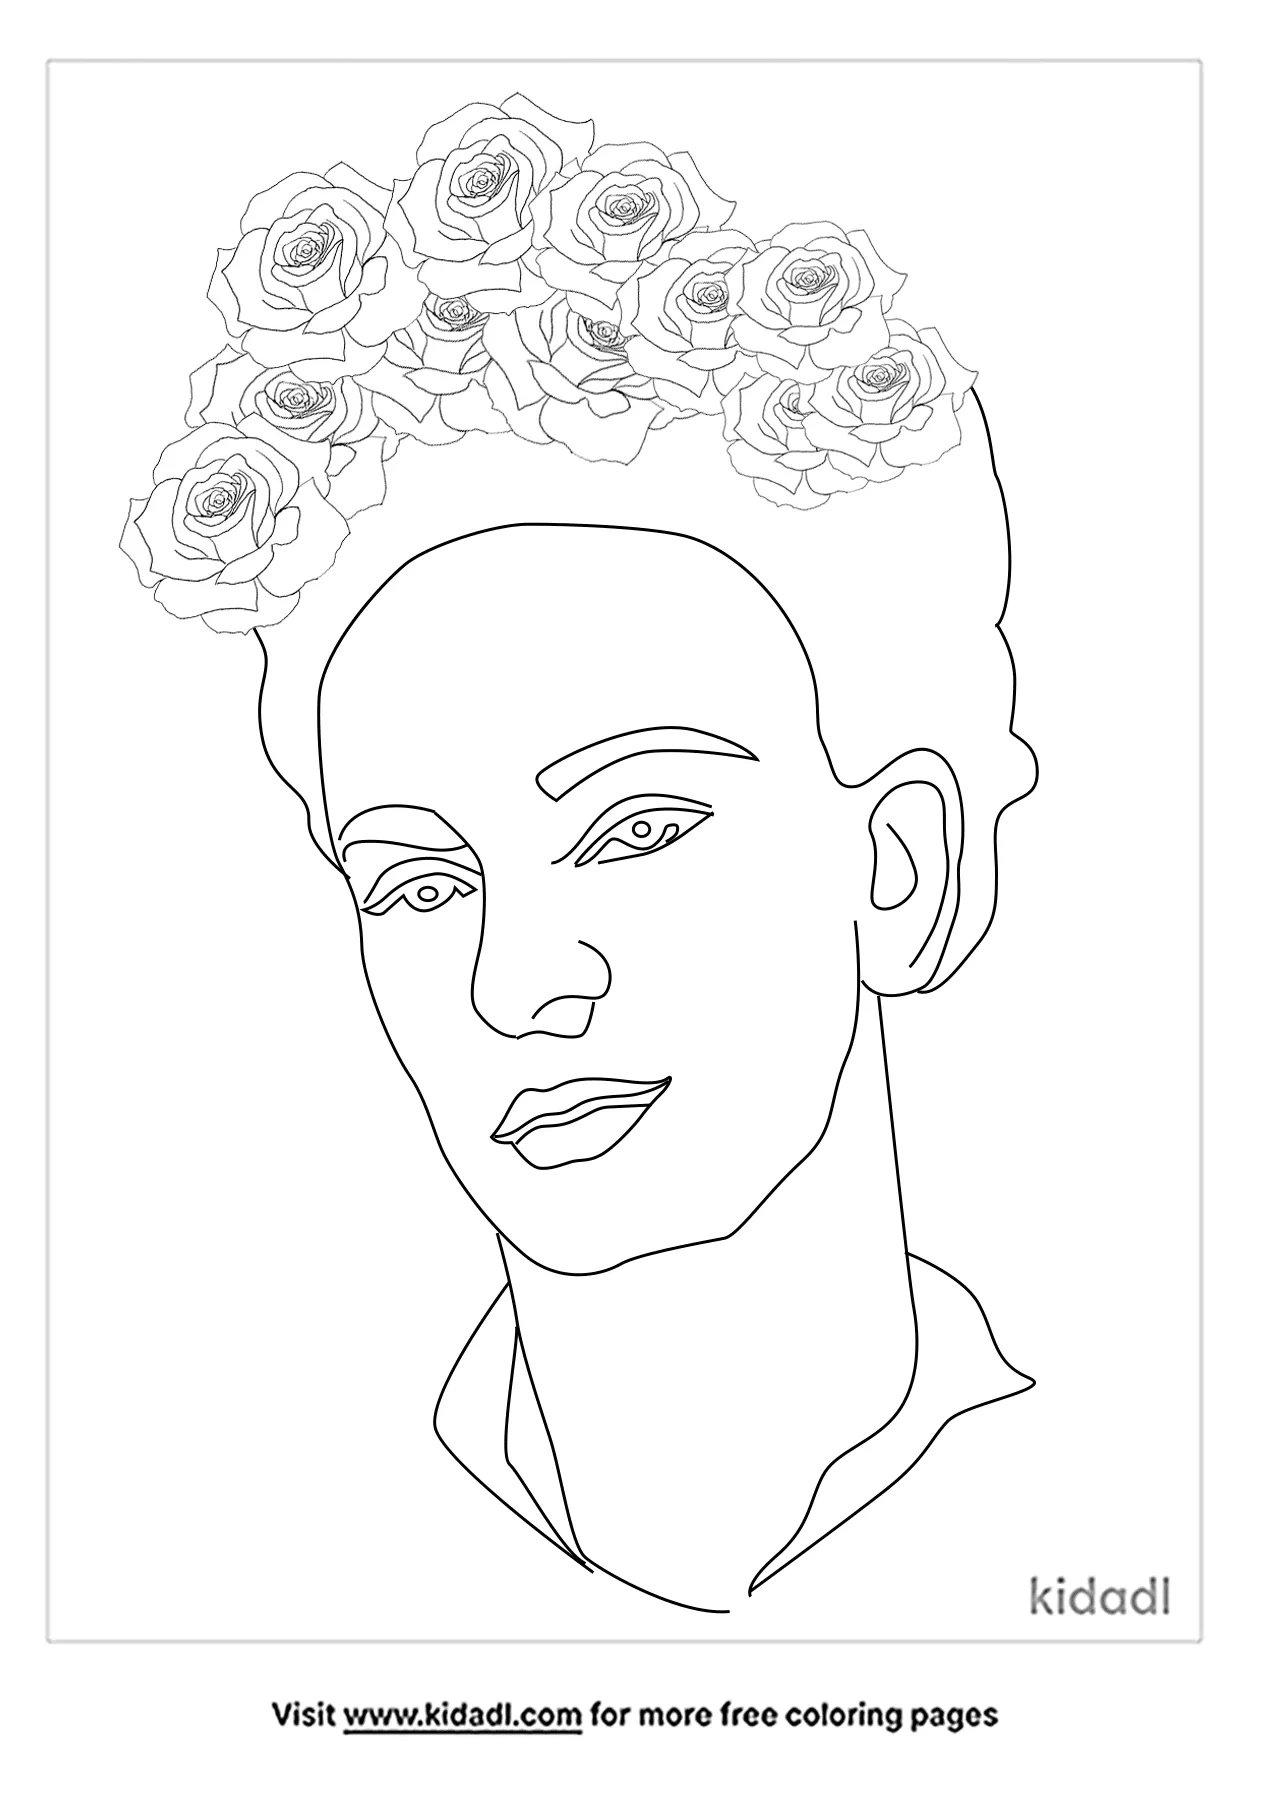 Free Frida Kahlo Coloring Page | Coloring Page Printables | Kidadl